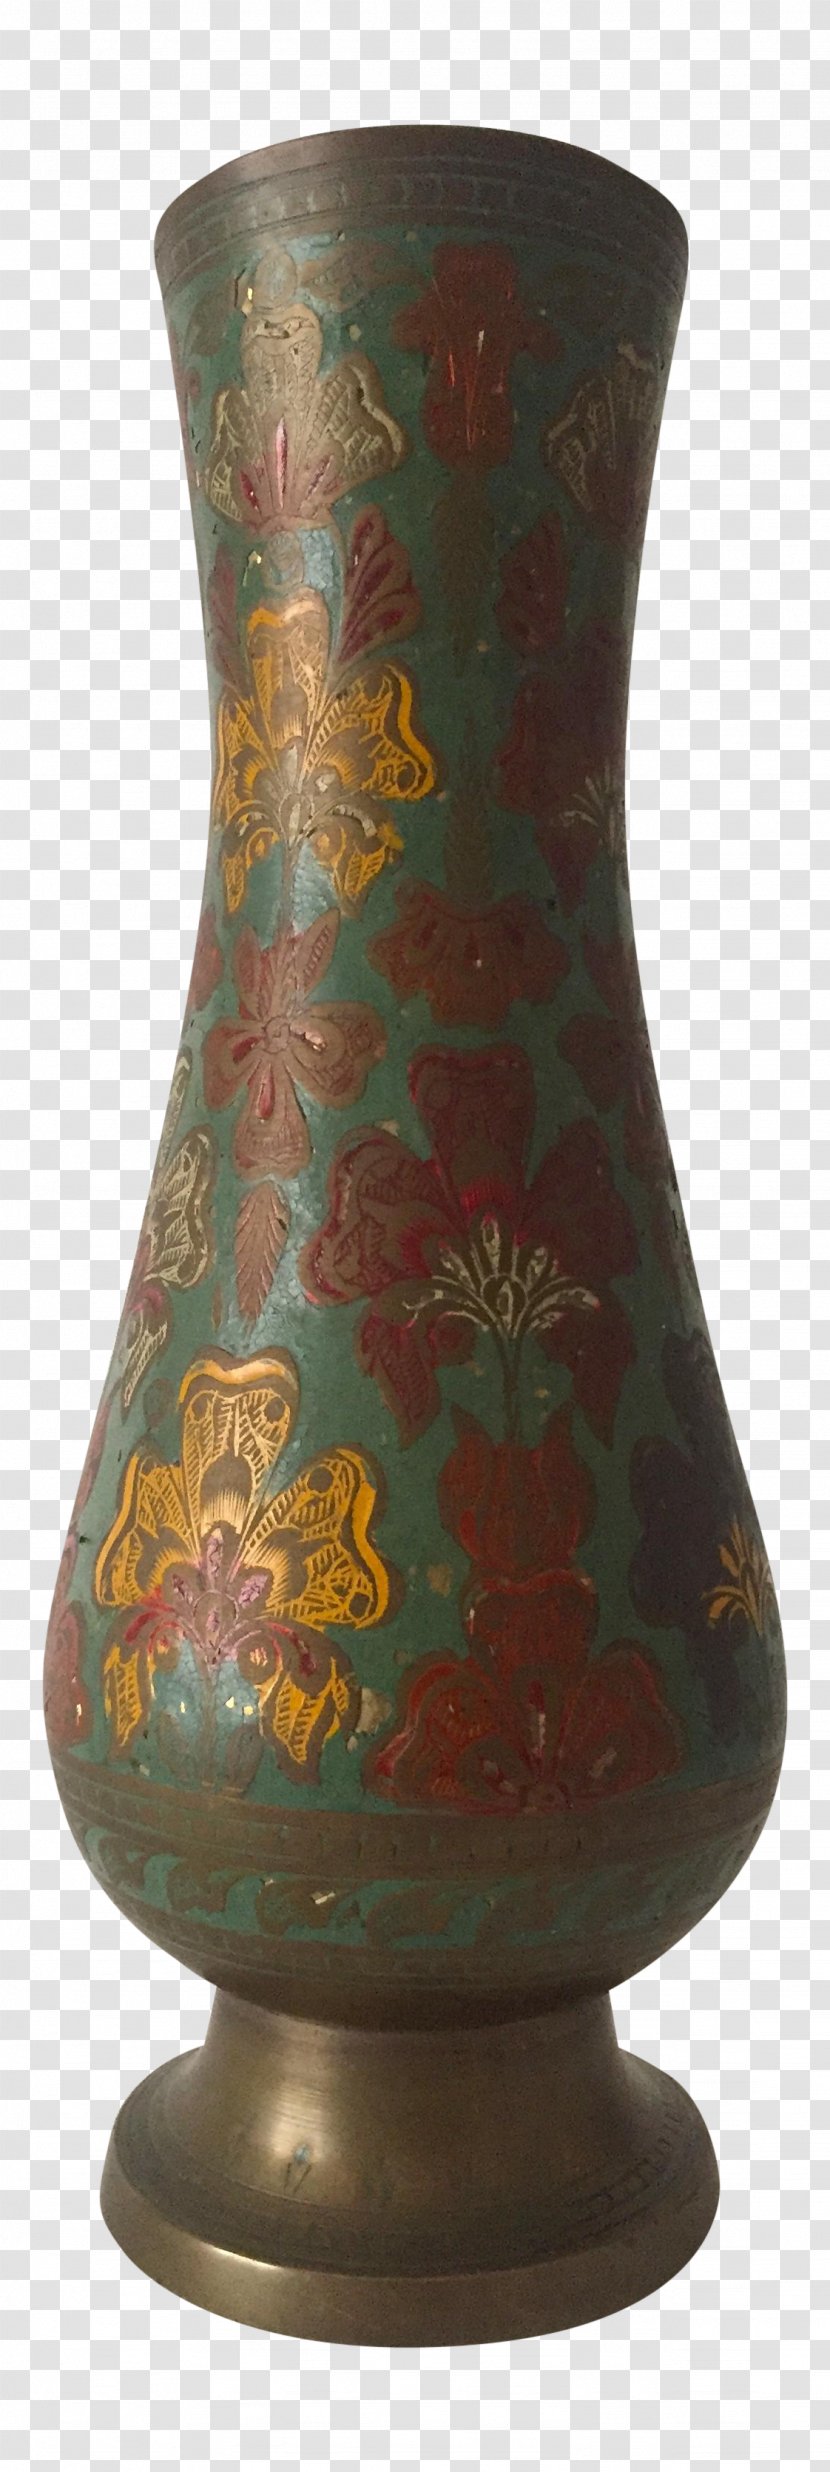 Vase Ceramic Artifact Pottery Urn Transparent PNG